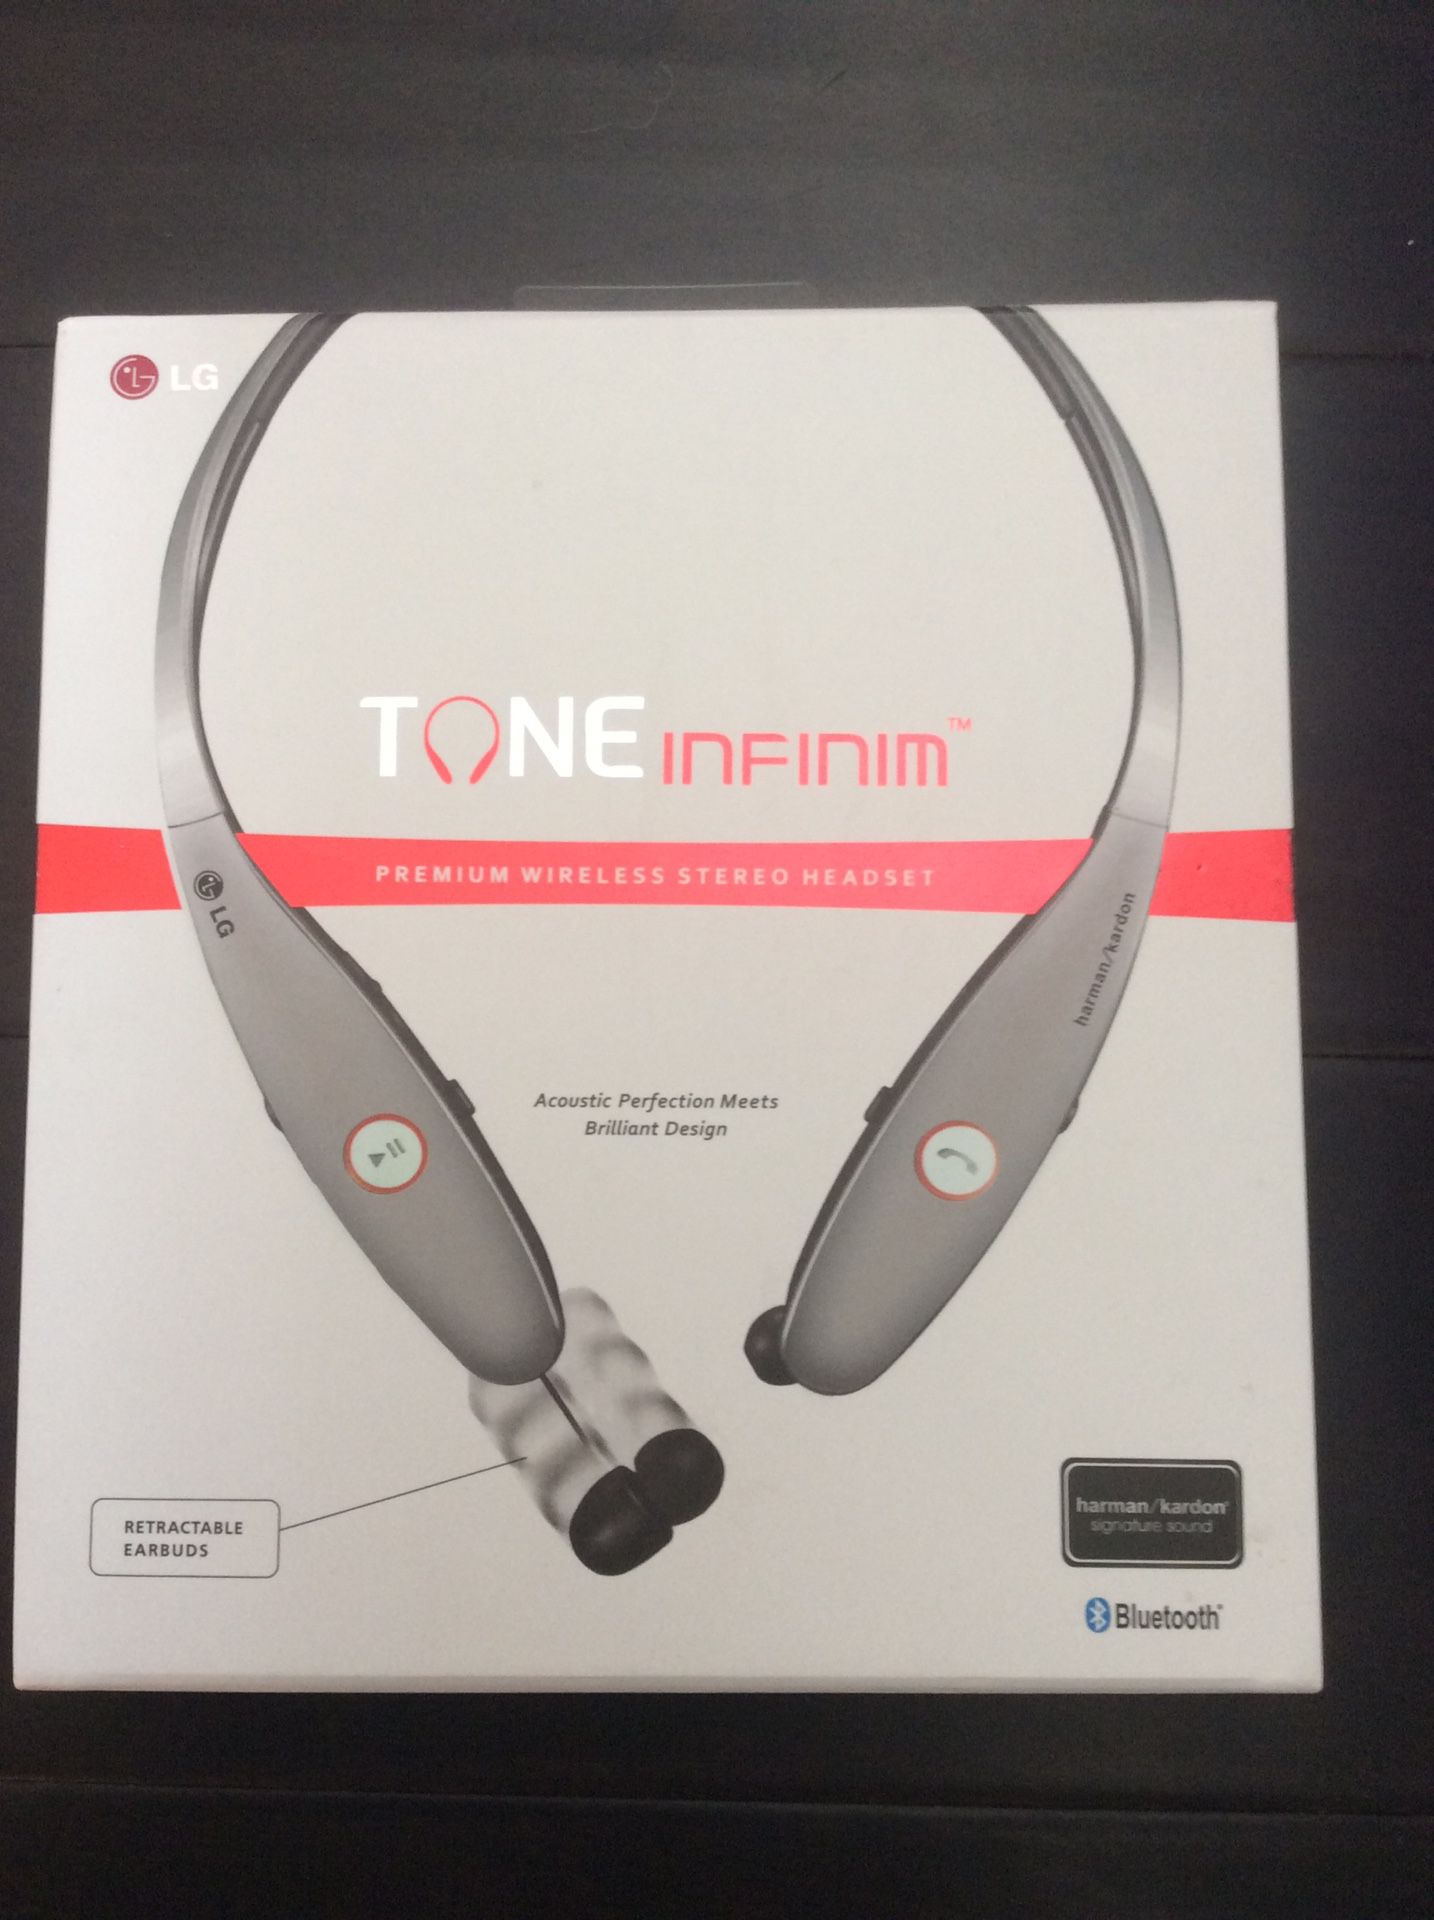 LG Tone Infinim HBS-900 Wireless Stereo Headset, Silver